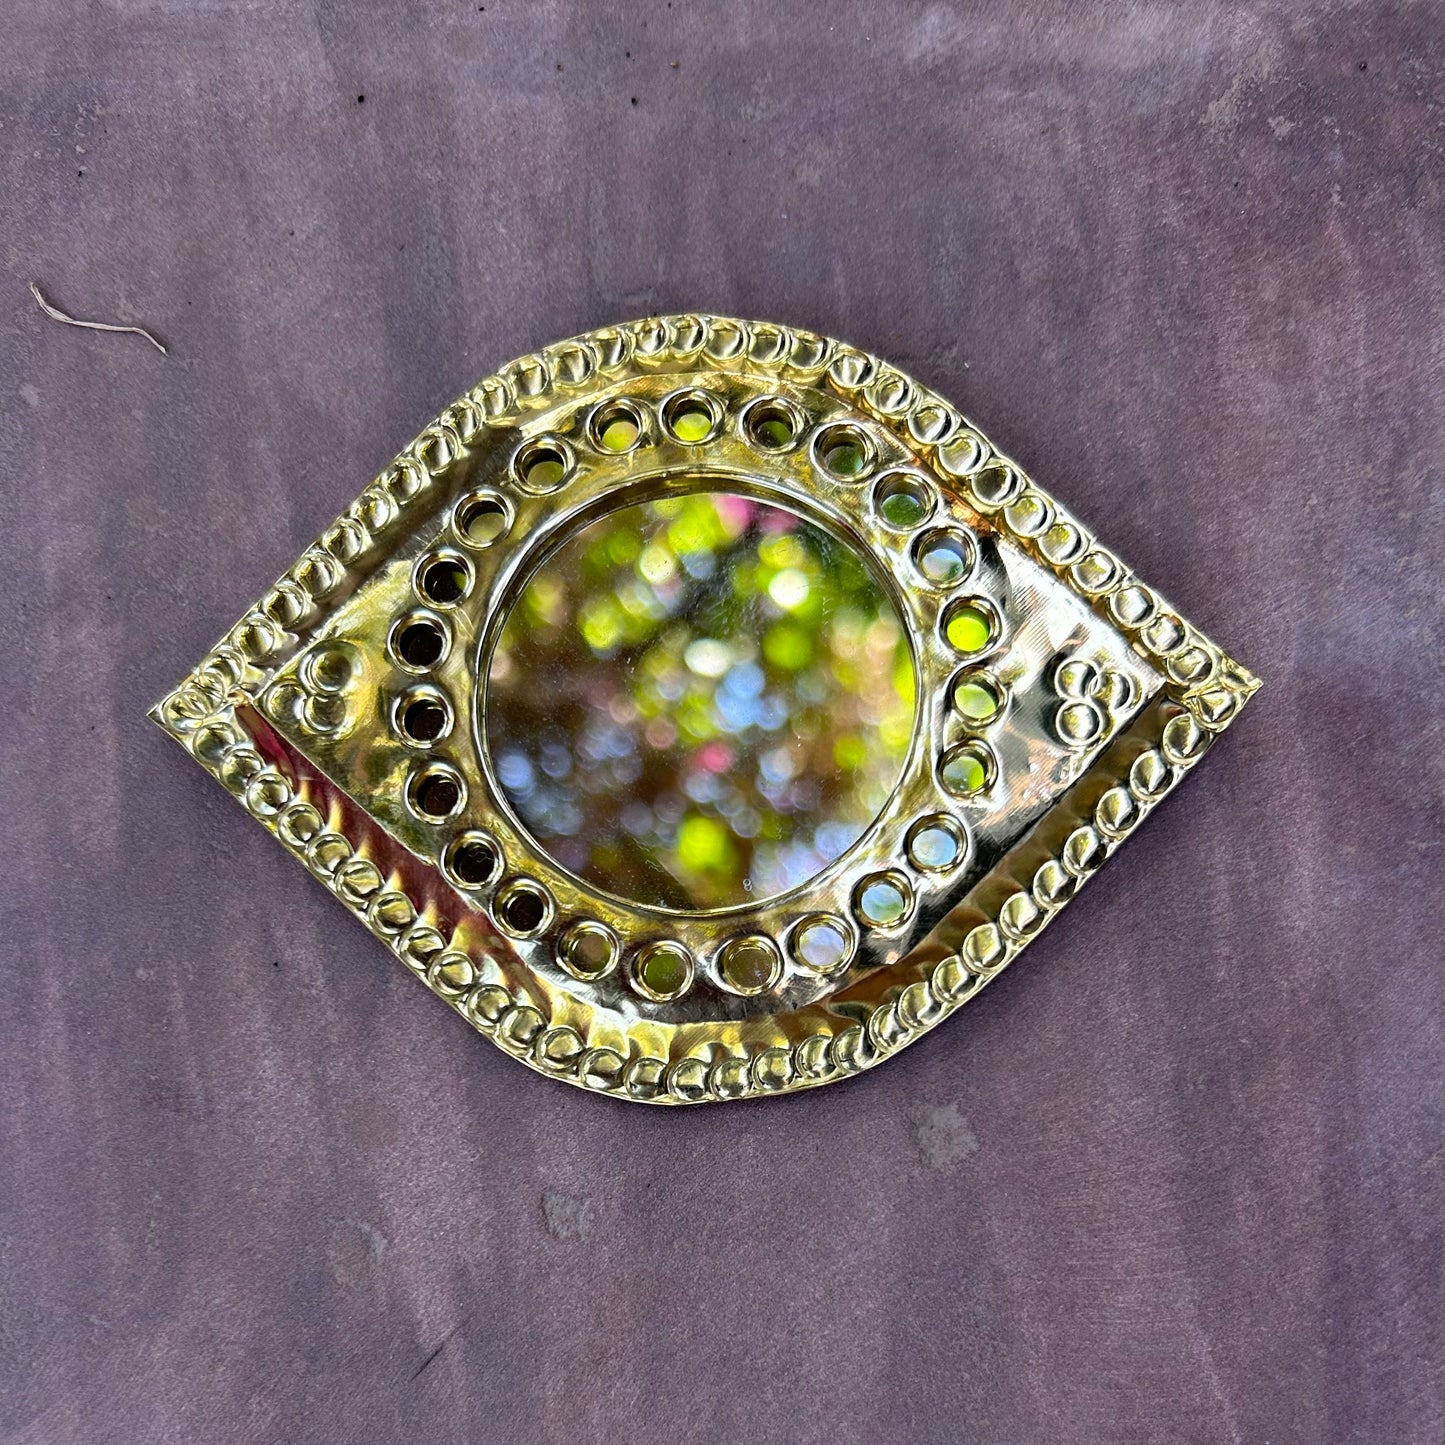 Moroccan mini mirrors made of brass